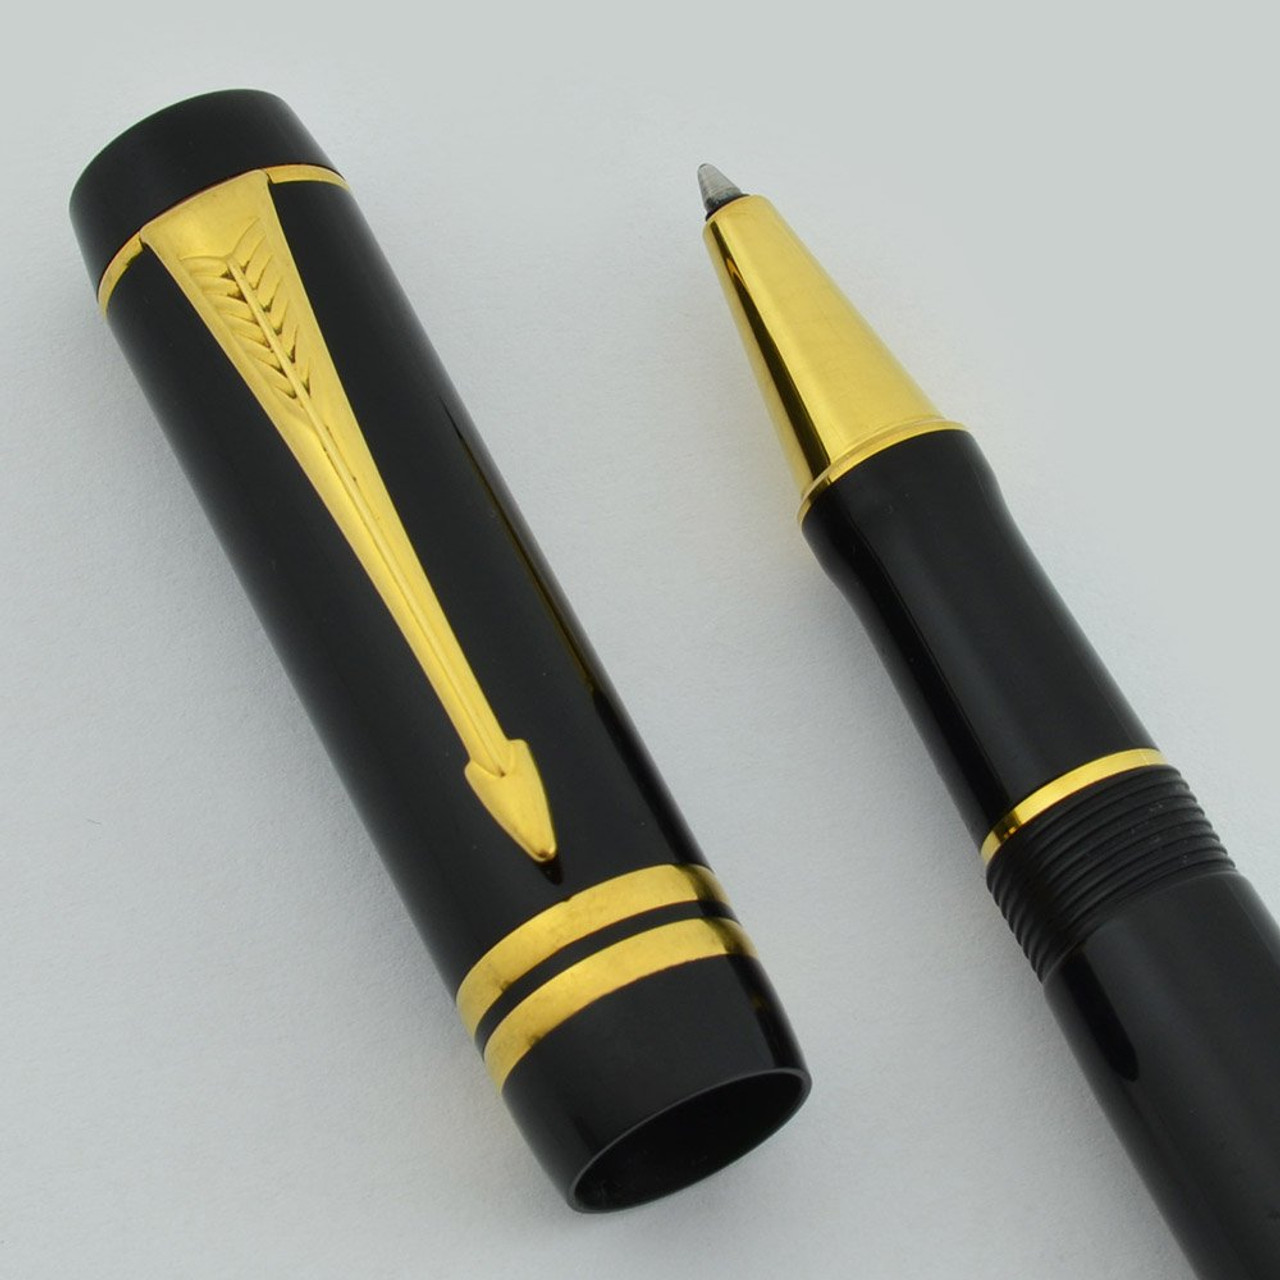 Parker Duofold Rollerball Pen - Black, Gold Trim, Harp Emblem (Very Nice, Works Well)